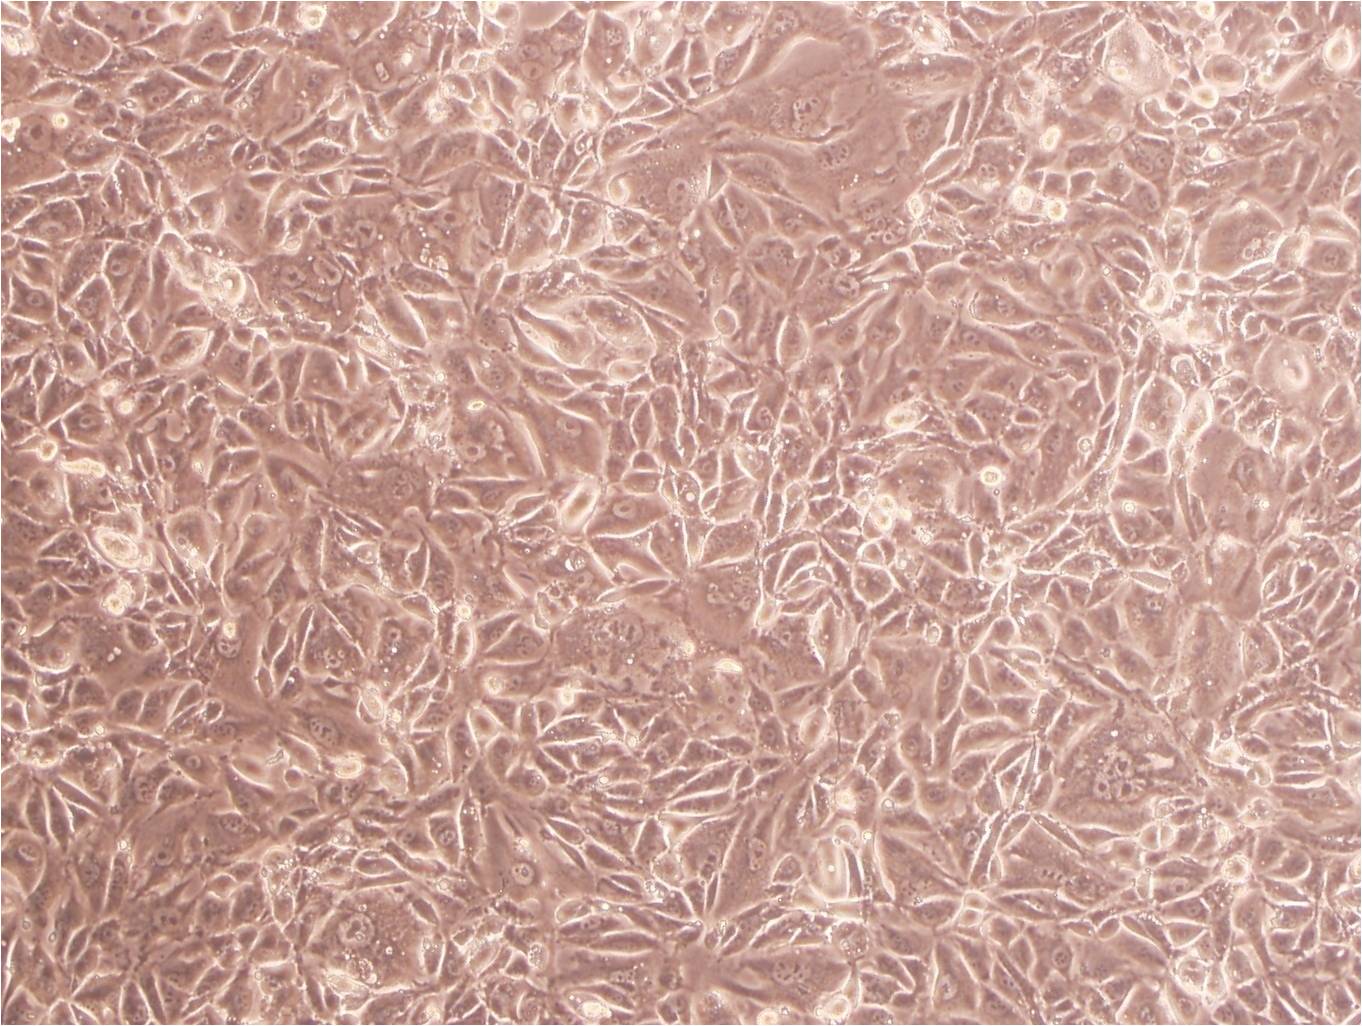 SCC7 Cell:小鼠鳞状细胞癌细胞系,SCC7 Cell